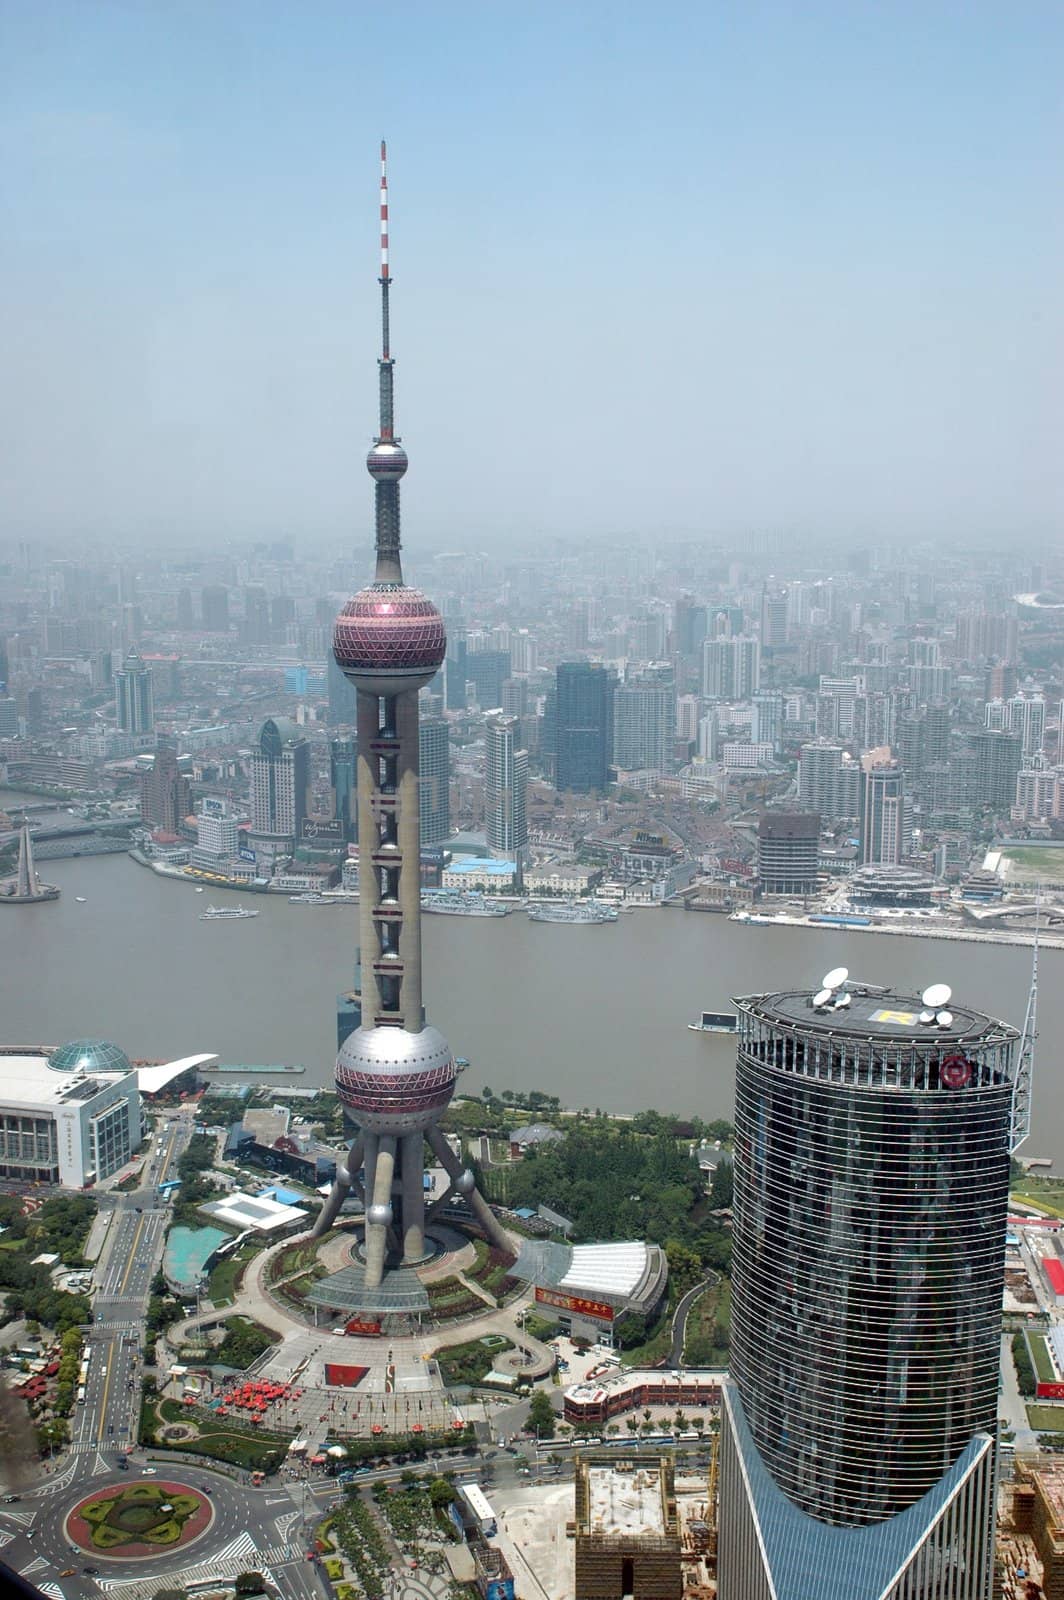 Shanghai, China - Huangpu river, Orient Pearl and modern skyscrapers.